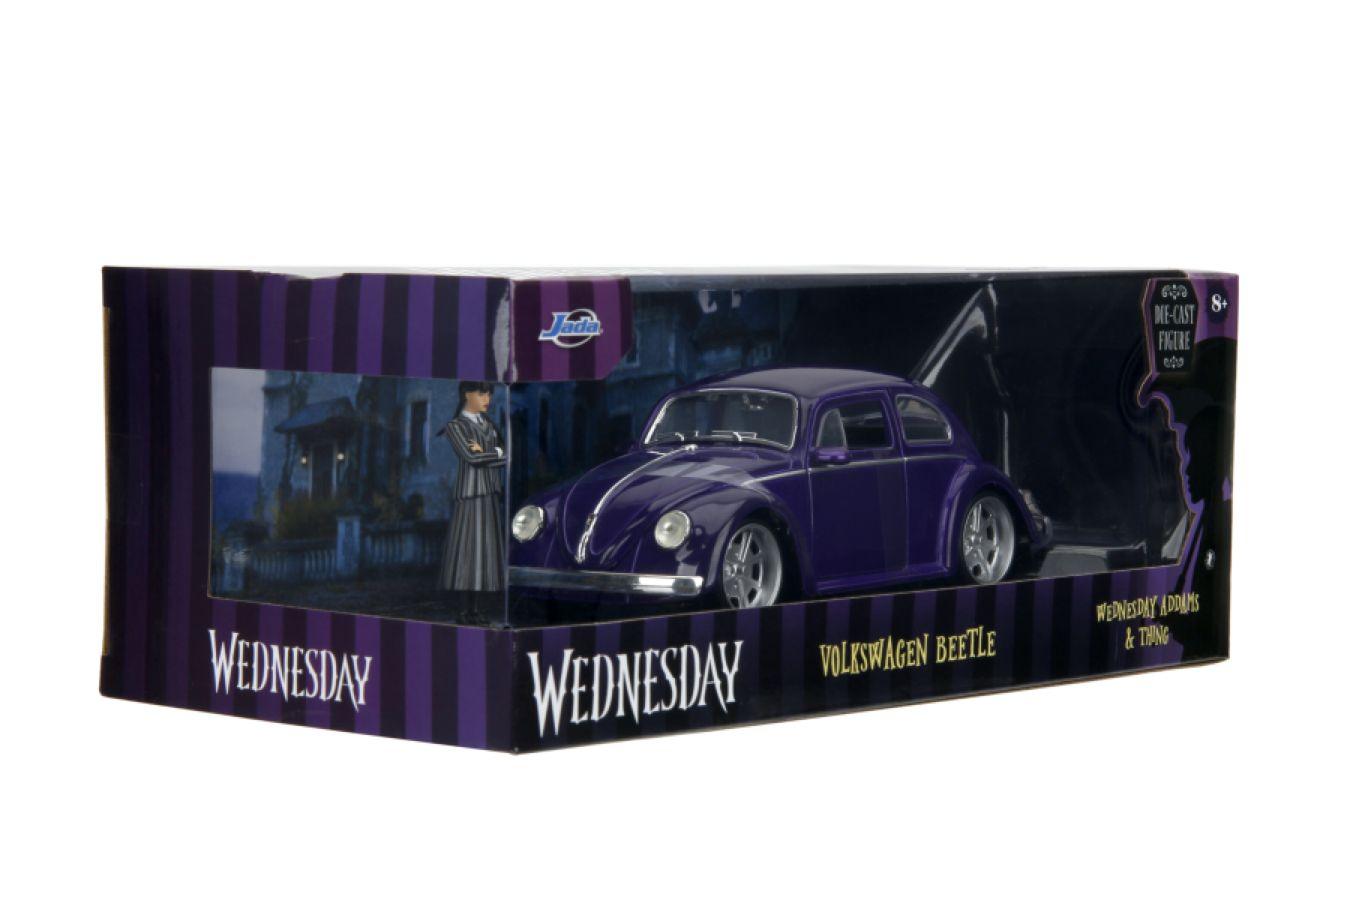 JAD35131 Wednesday (TV) - VW Beetle (with Wednesday) 1:24 Scale Diecast Vehicle - Jada Toys - Titan Pop Culture